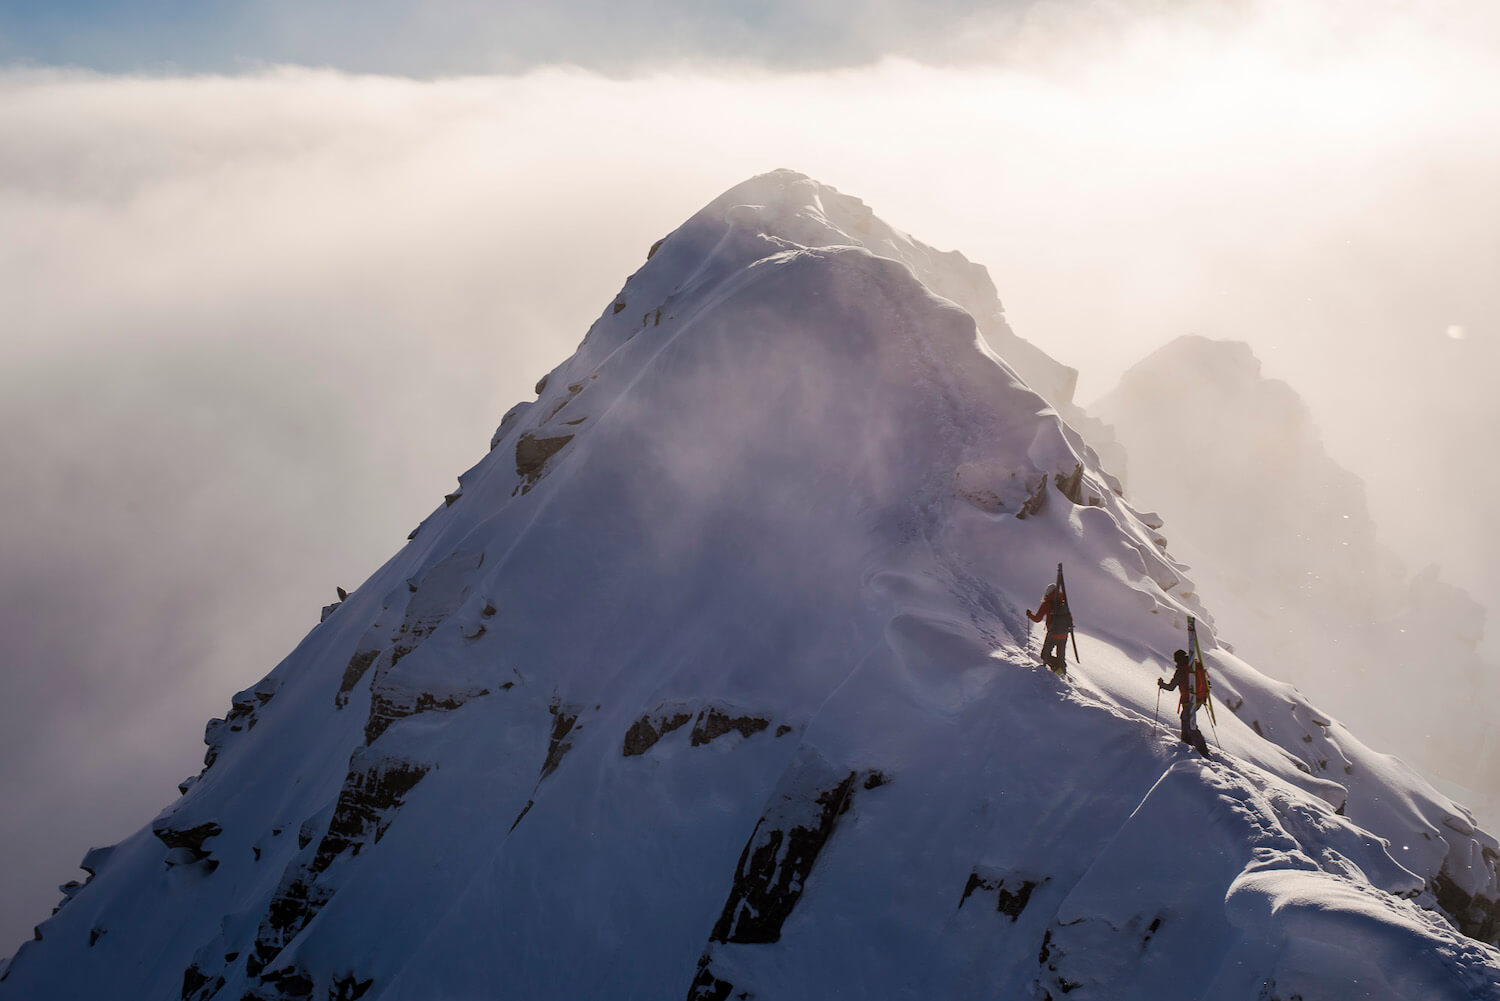 sommets enneigés et skieurs - protect our winters